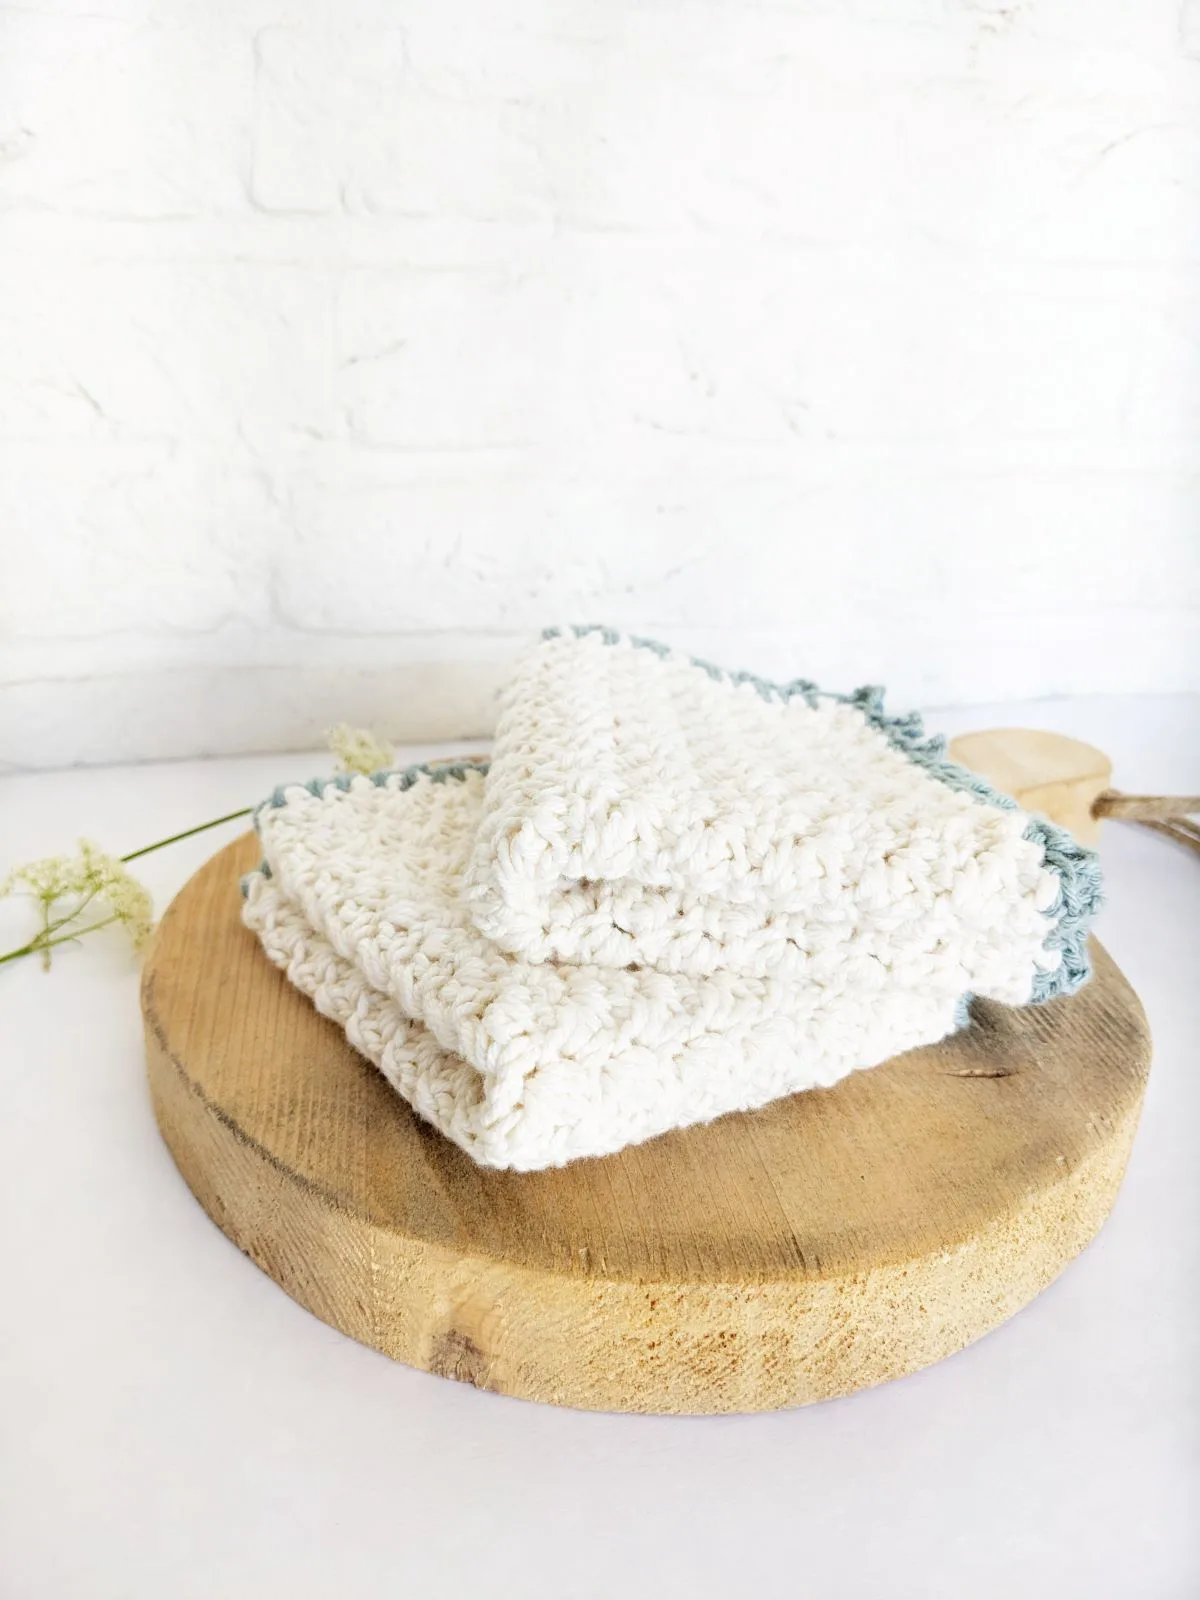 A cotton crochet washcloth on a wooden board.